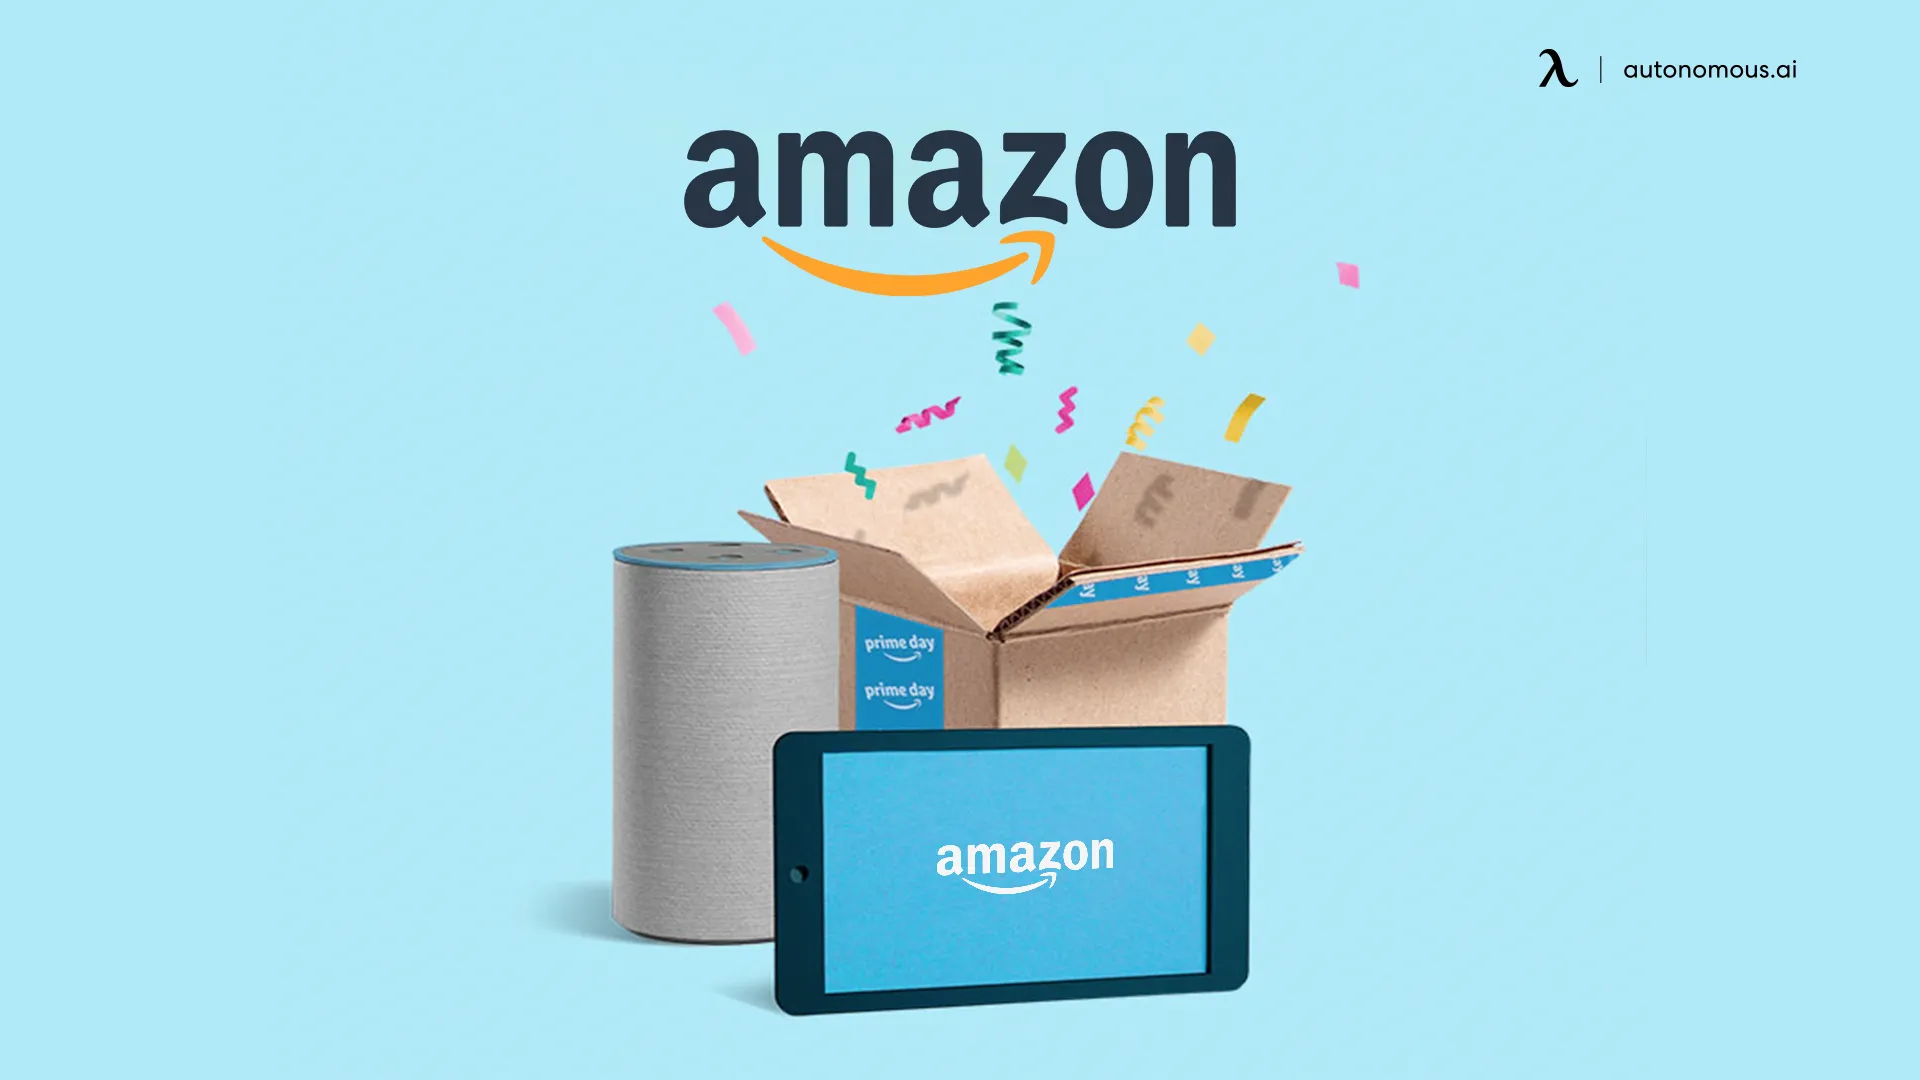 Amazon labor day deals